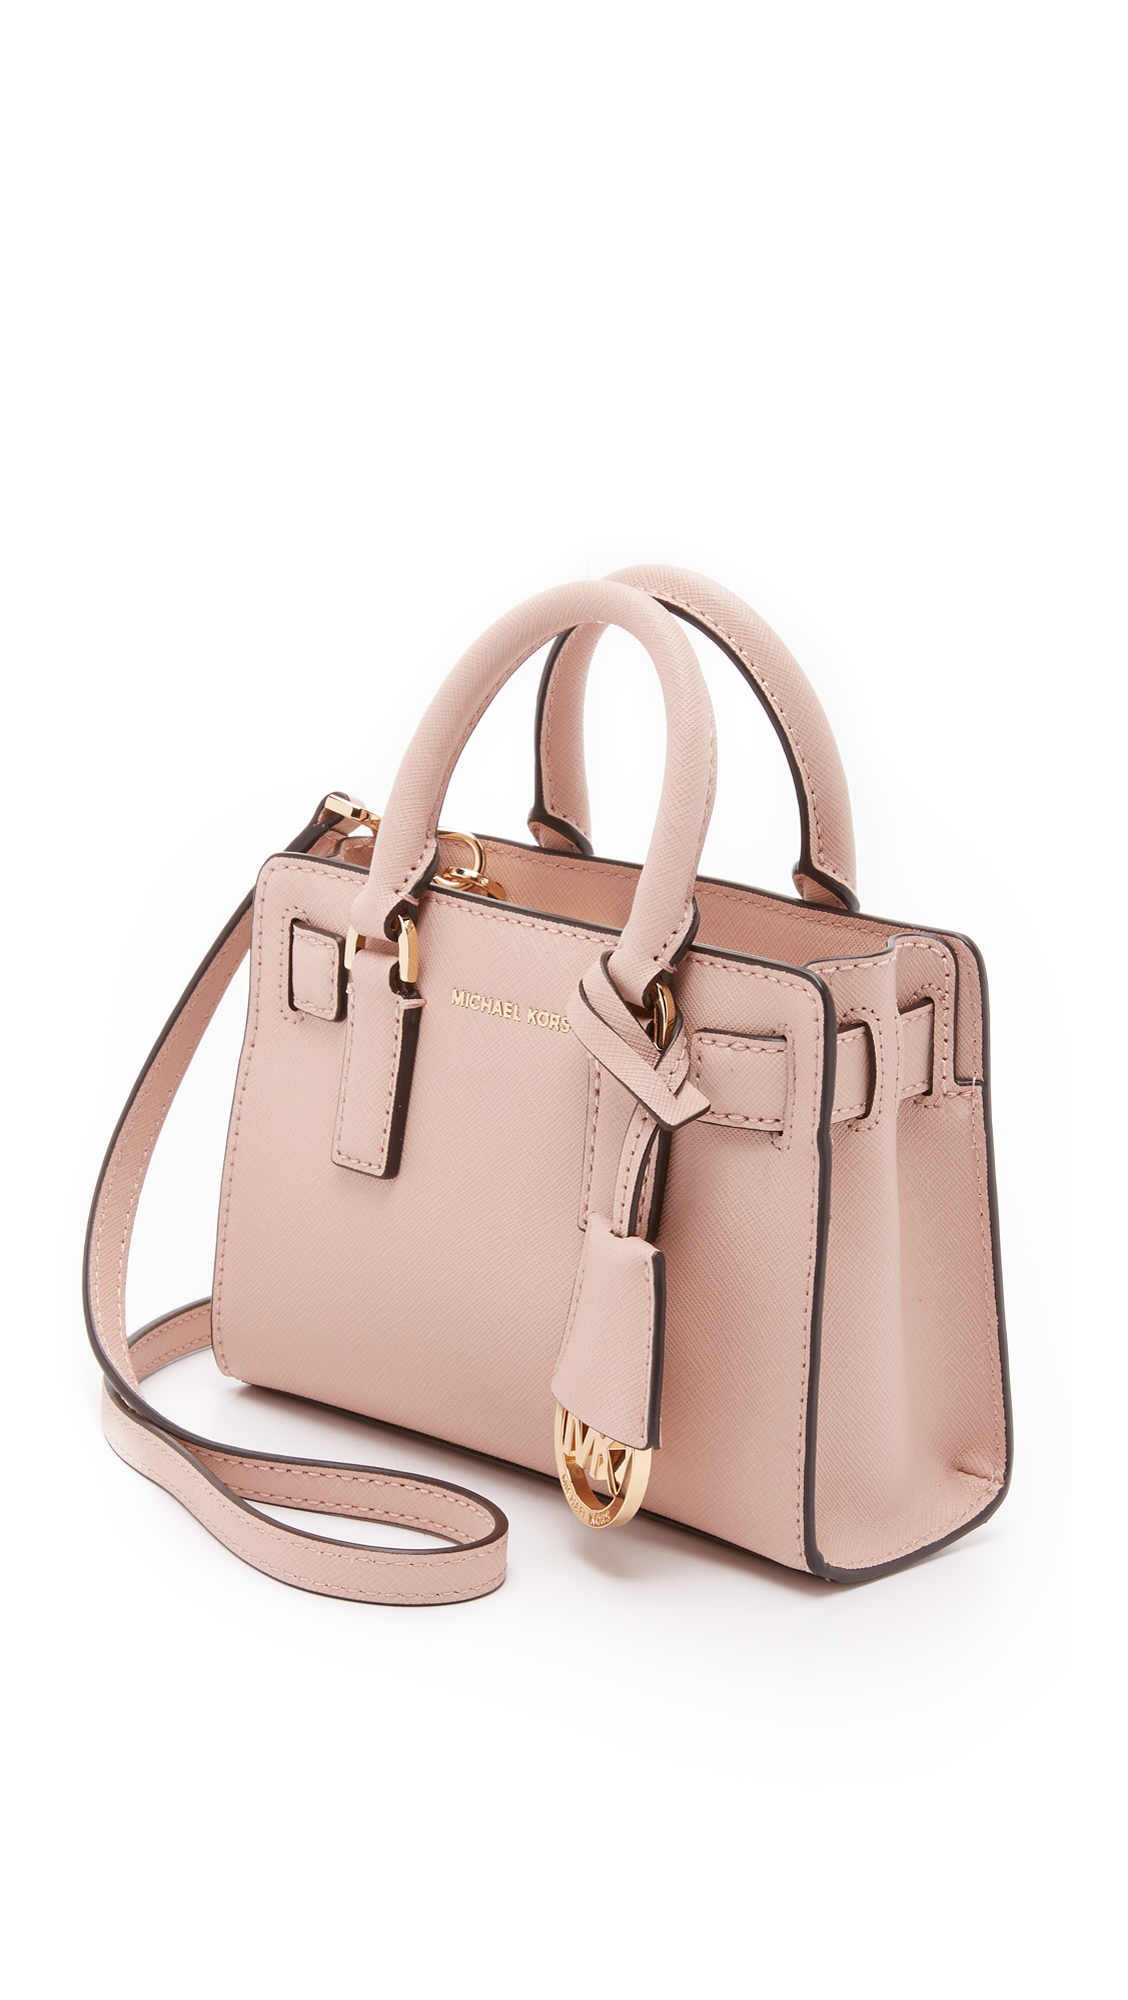 michael kors handbags dillon small saffiano leather satchel